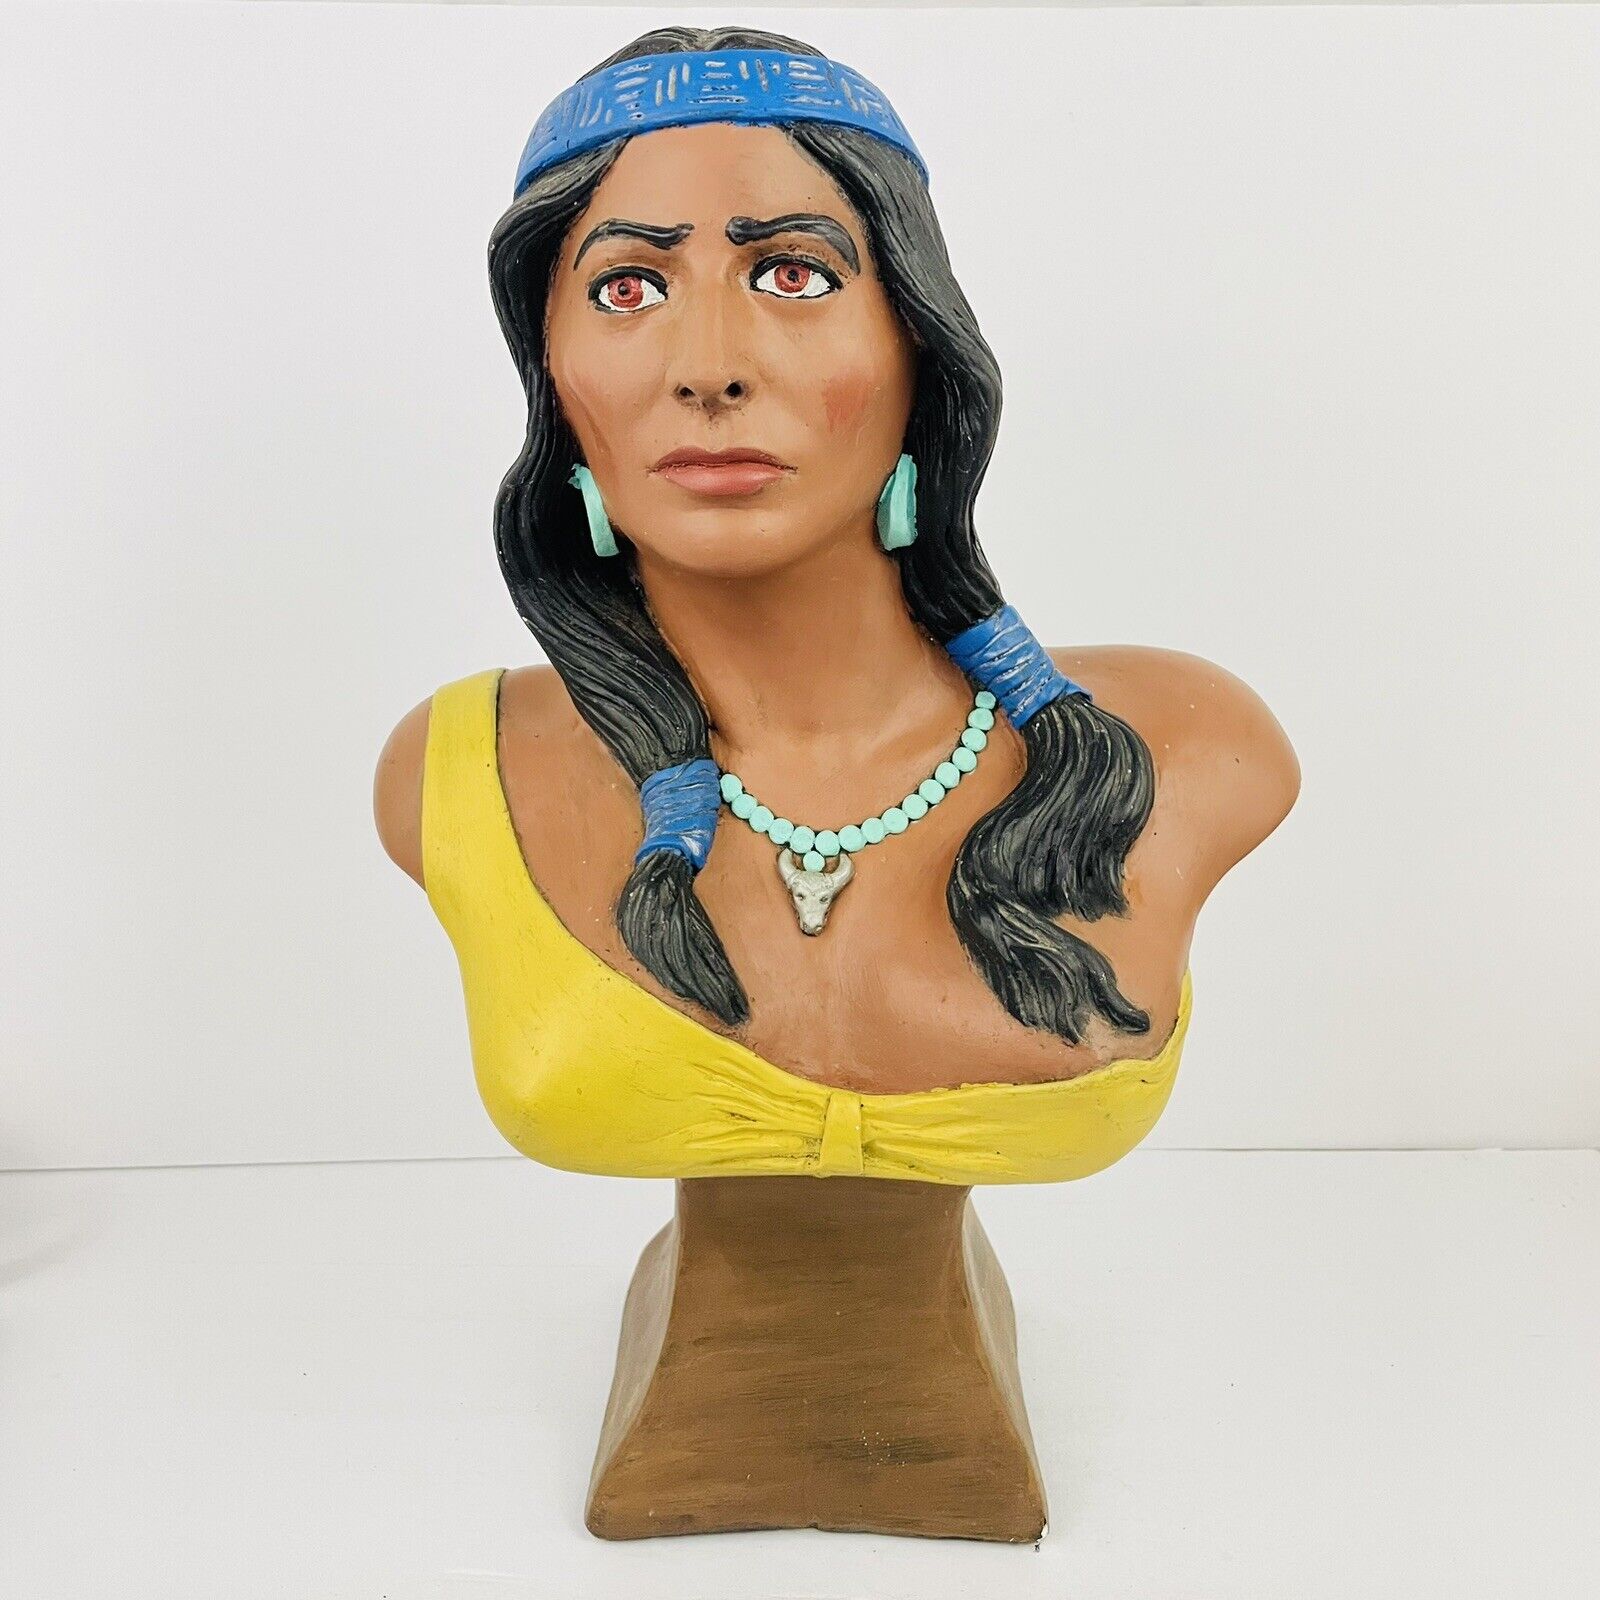 Vintage Native American Female Indian Bust Chalkware Sculpture Art White Studio